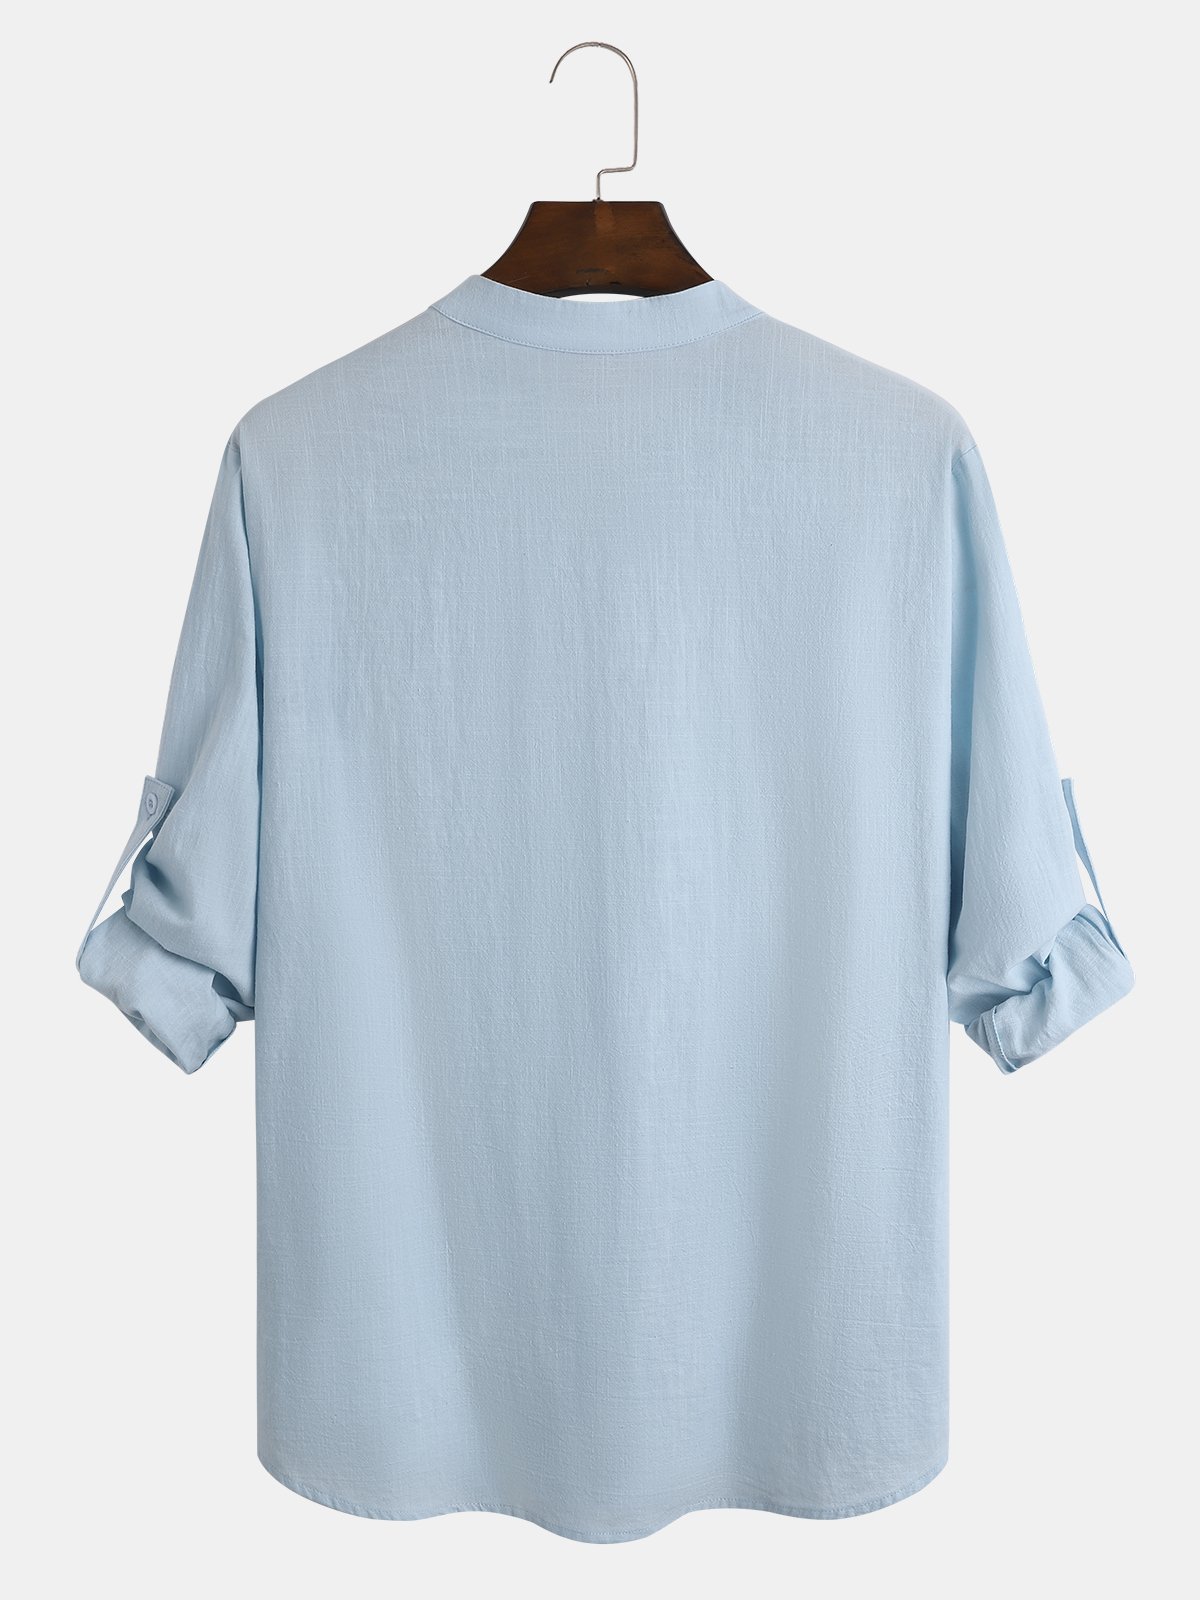 Plain bamboo Cotton  Casual Long Sleeve Shirt